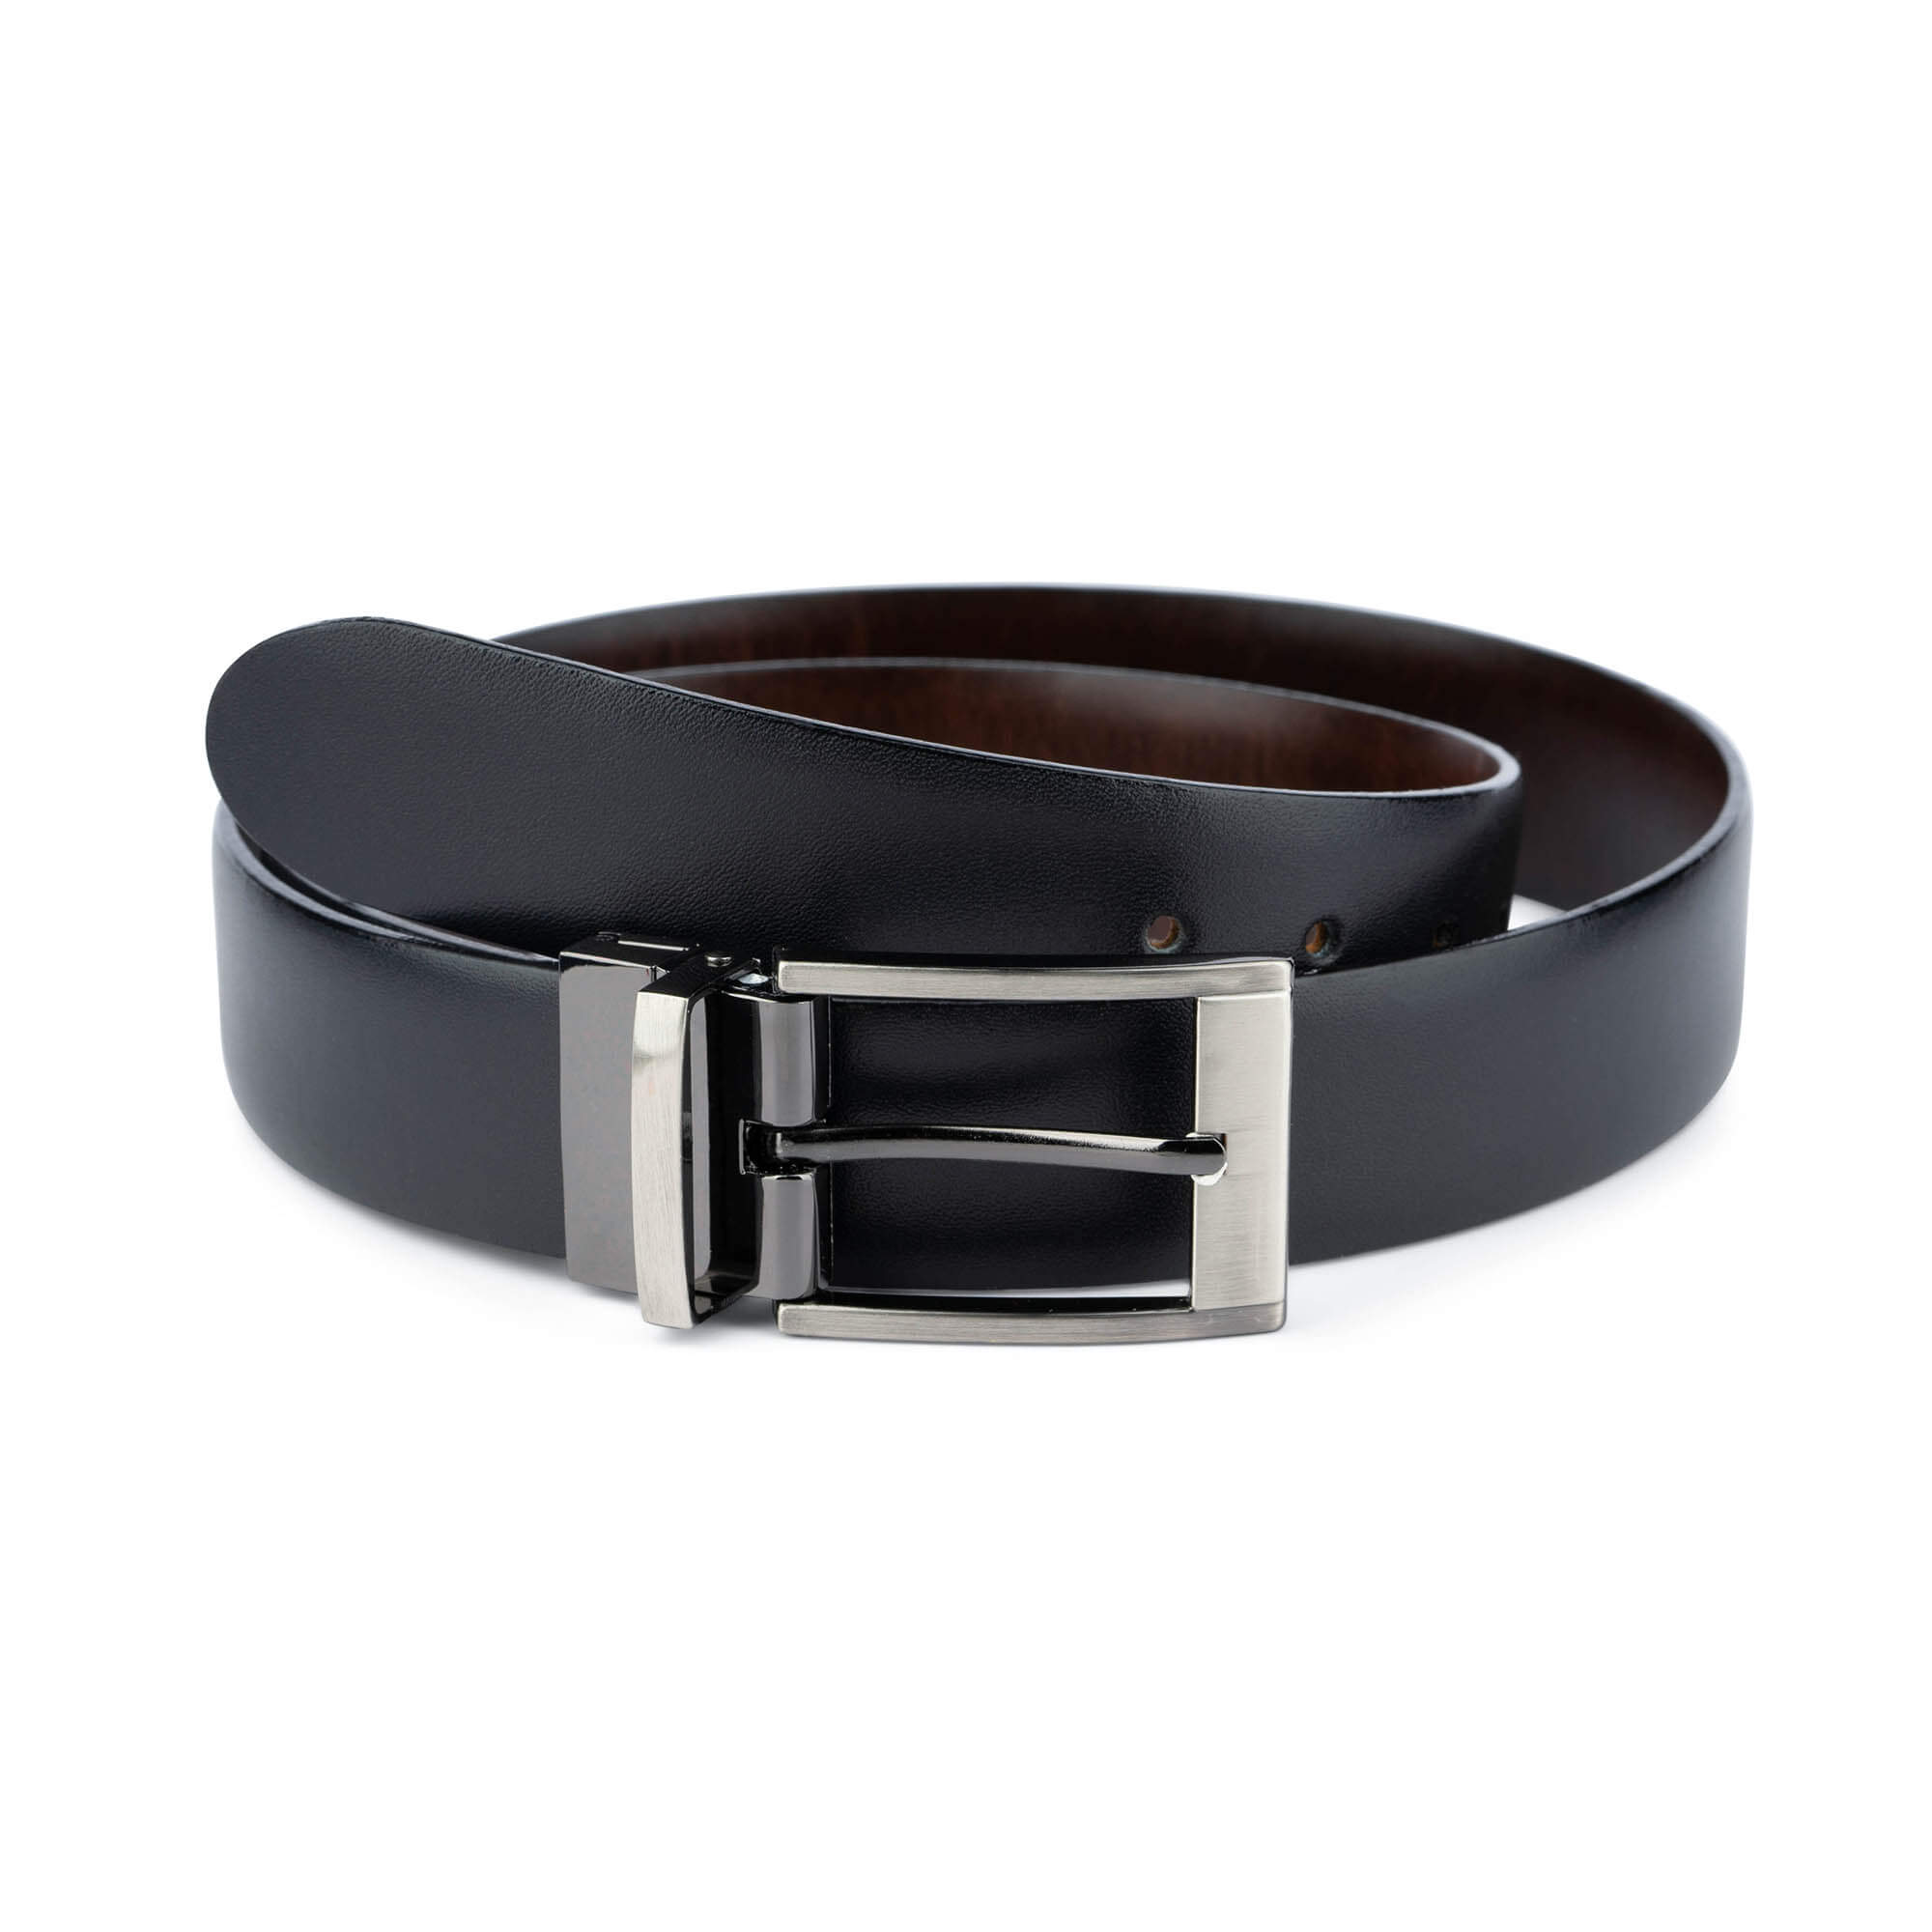 Buy Men's Leather Reversible Belt For Suit | LeatherBeltsOnline.com